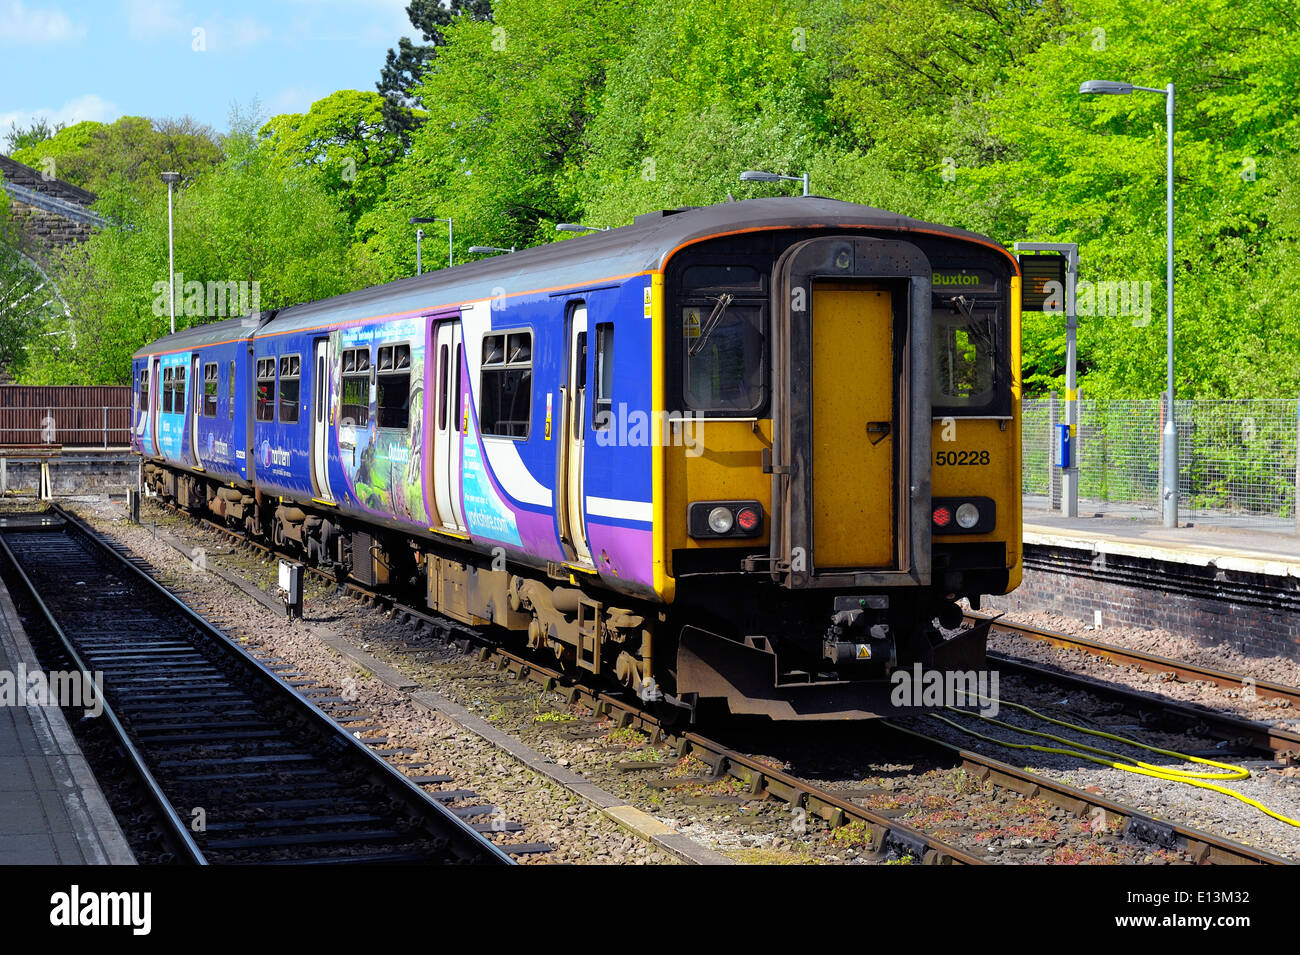 Diesel multiple unit 150228 at Buxton railway station Derbyshire england uk Stock Photo